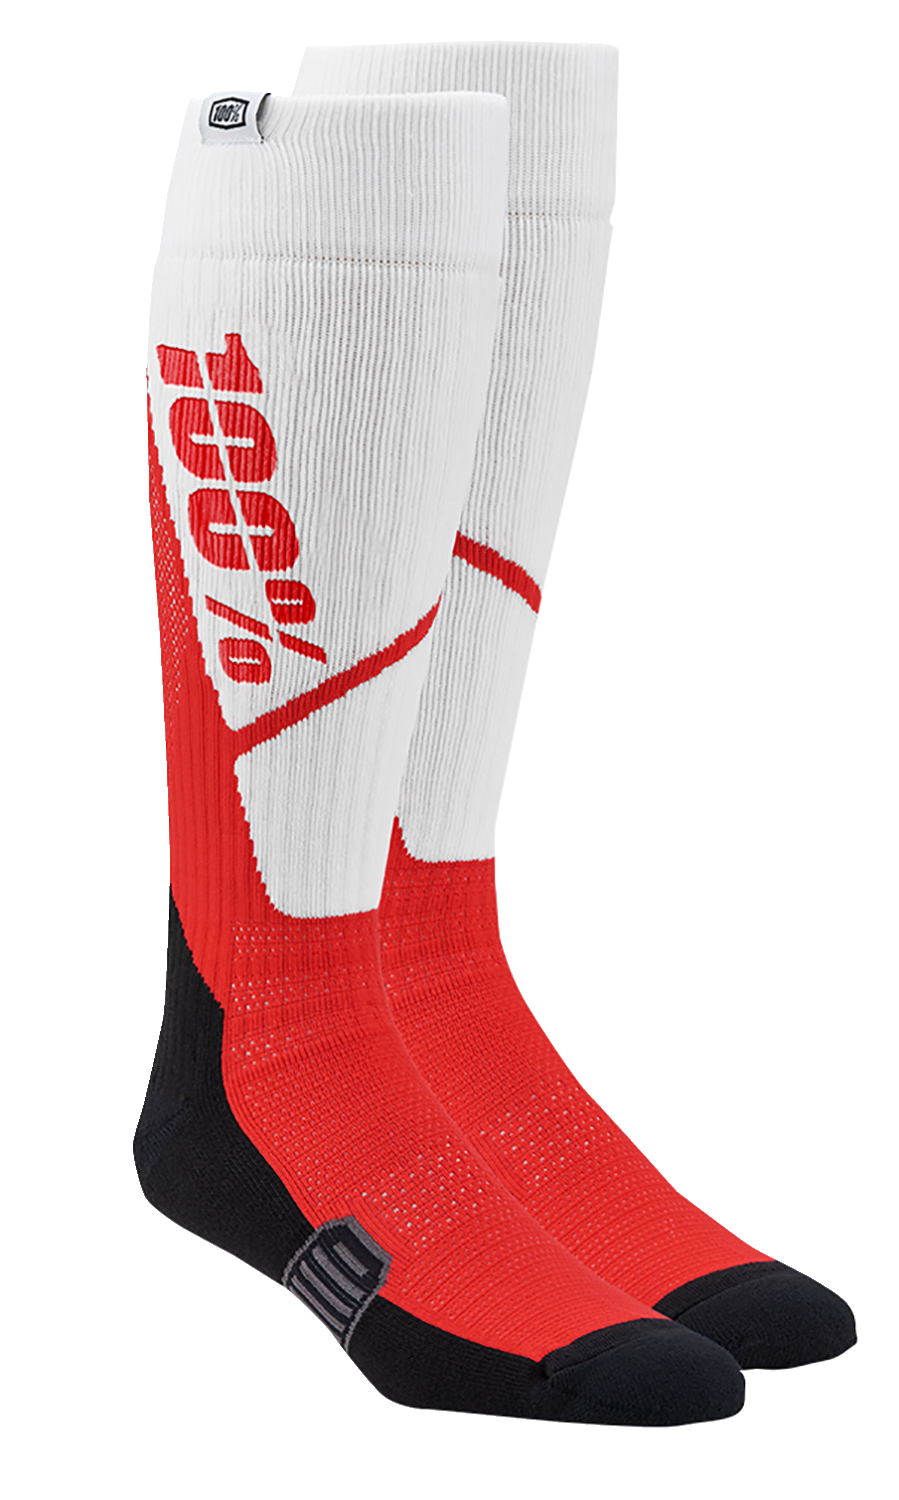 100% Torque Comfort Moto Socks - White/Red - Small/Medium 20053-00009